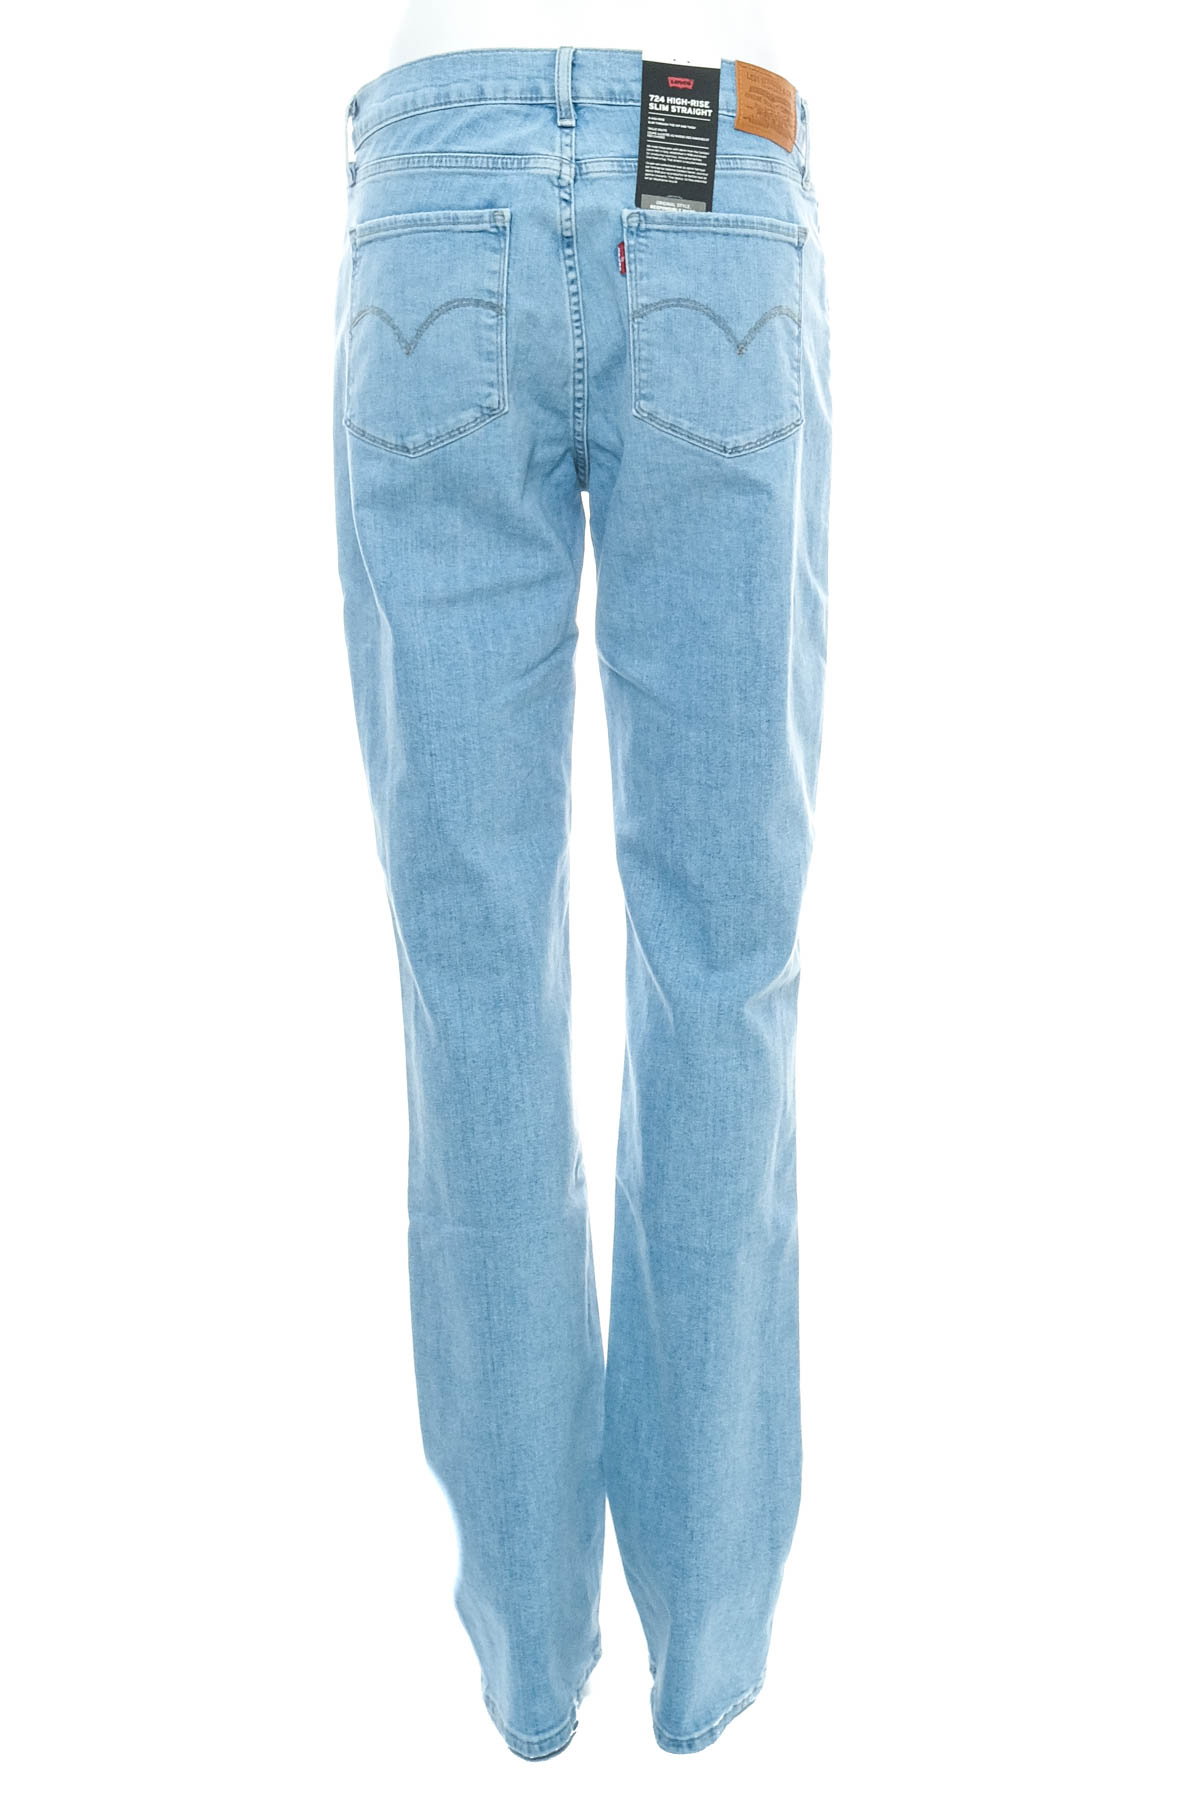 Women's jeans - LEVI'S - 1